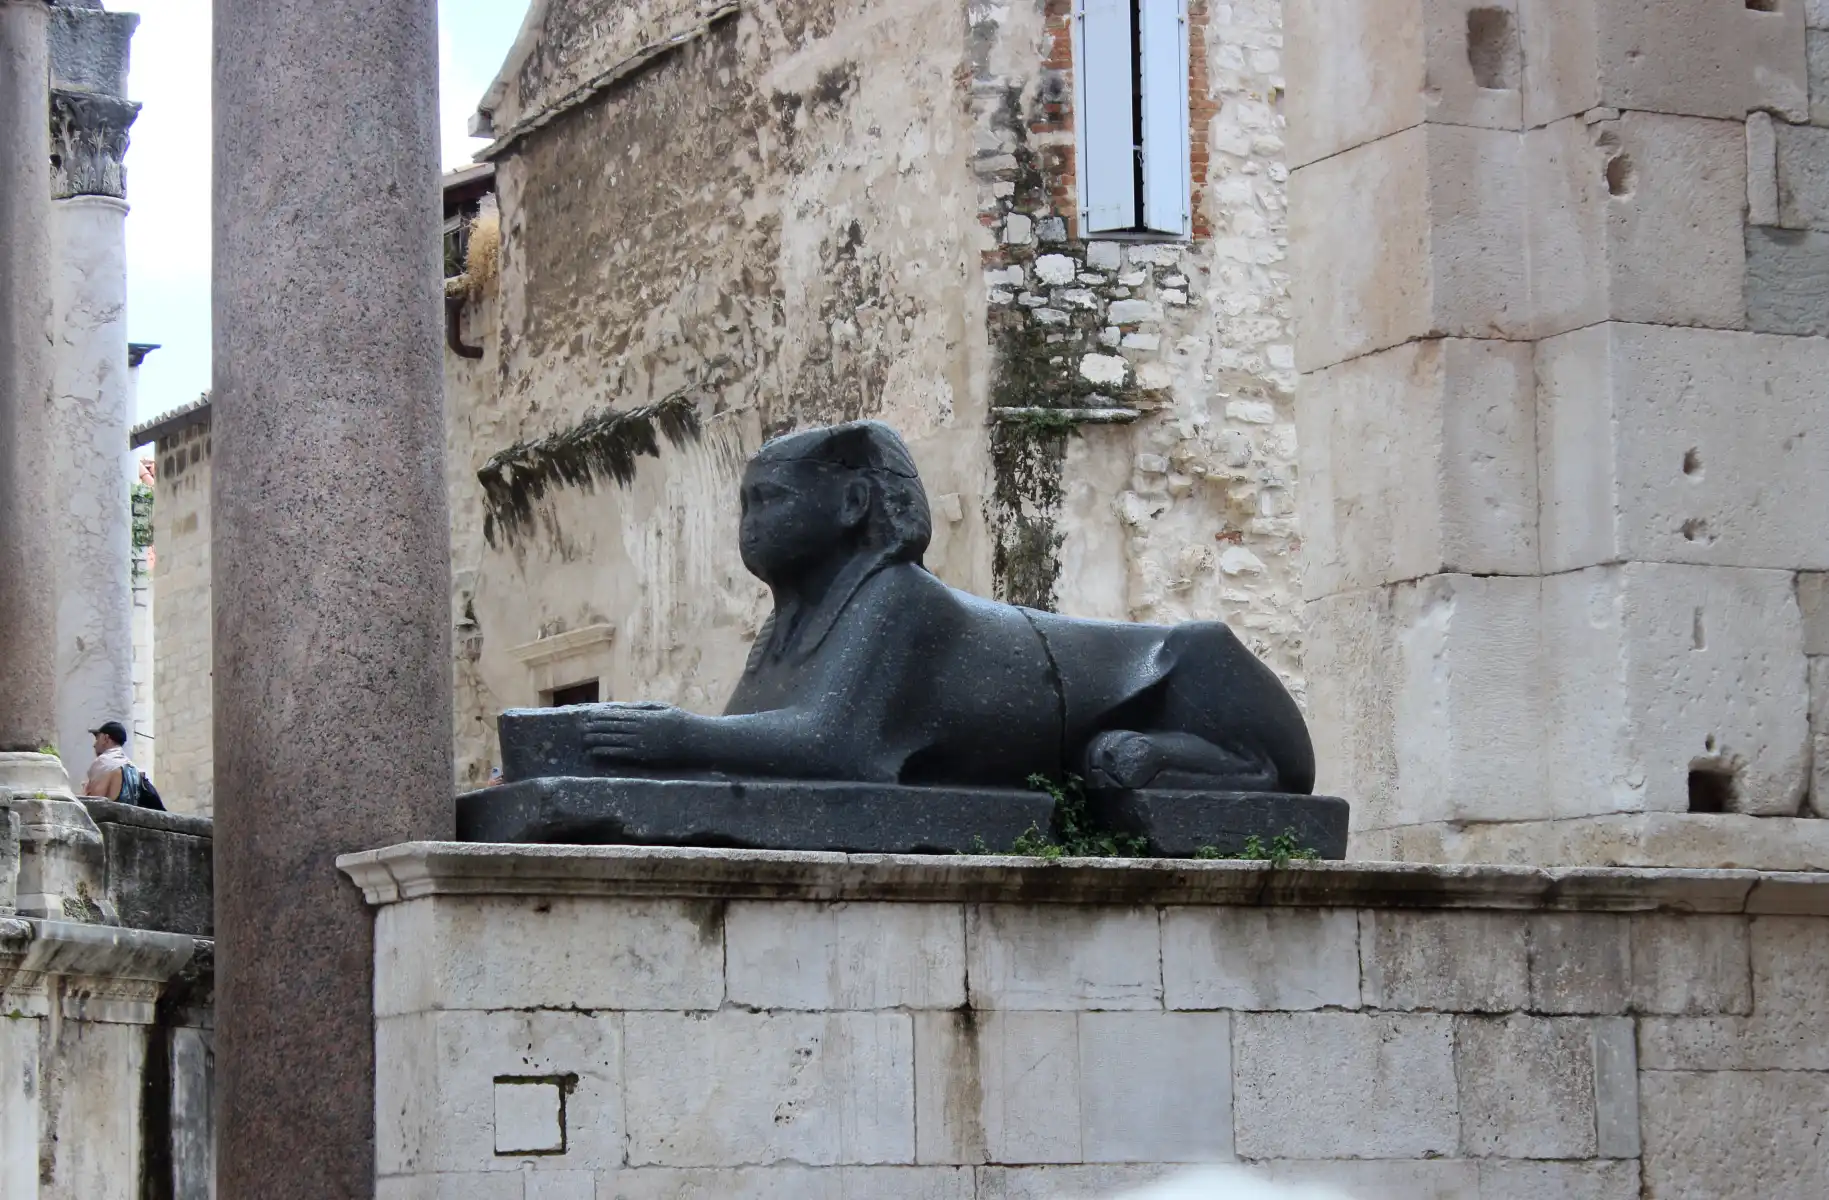 Local tour guide Split - Sphinx on Peristil